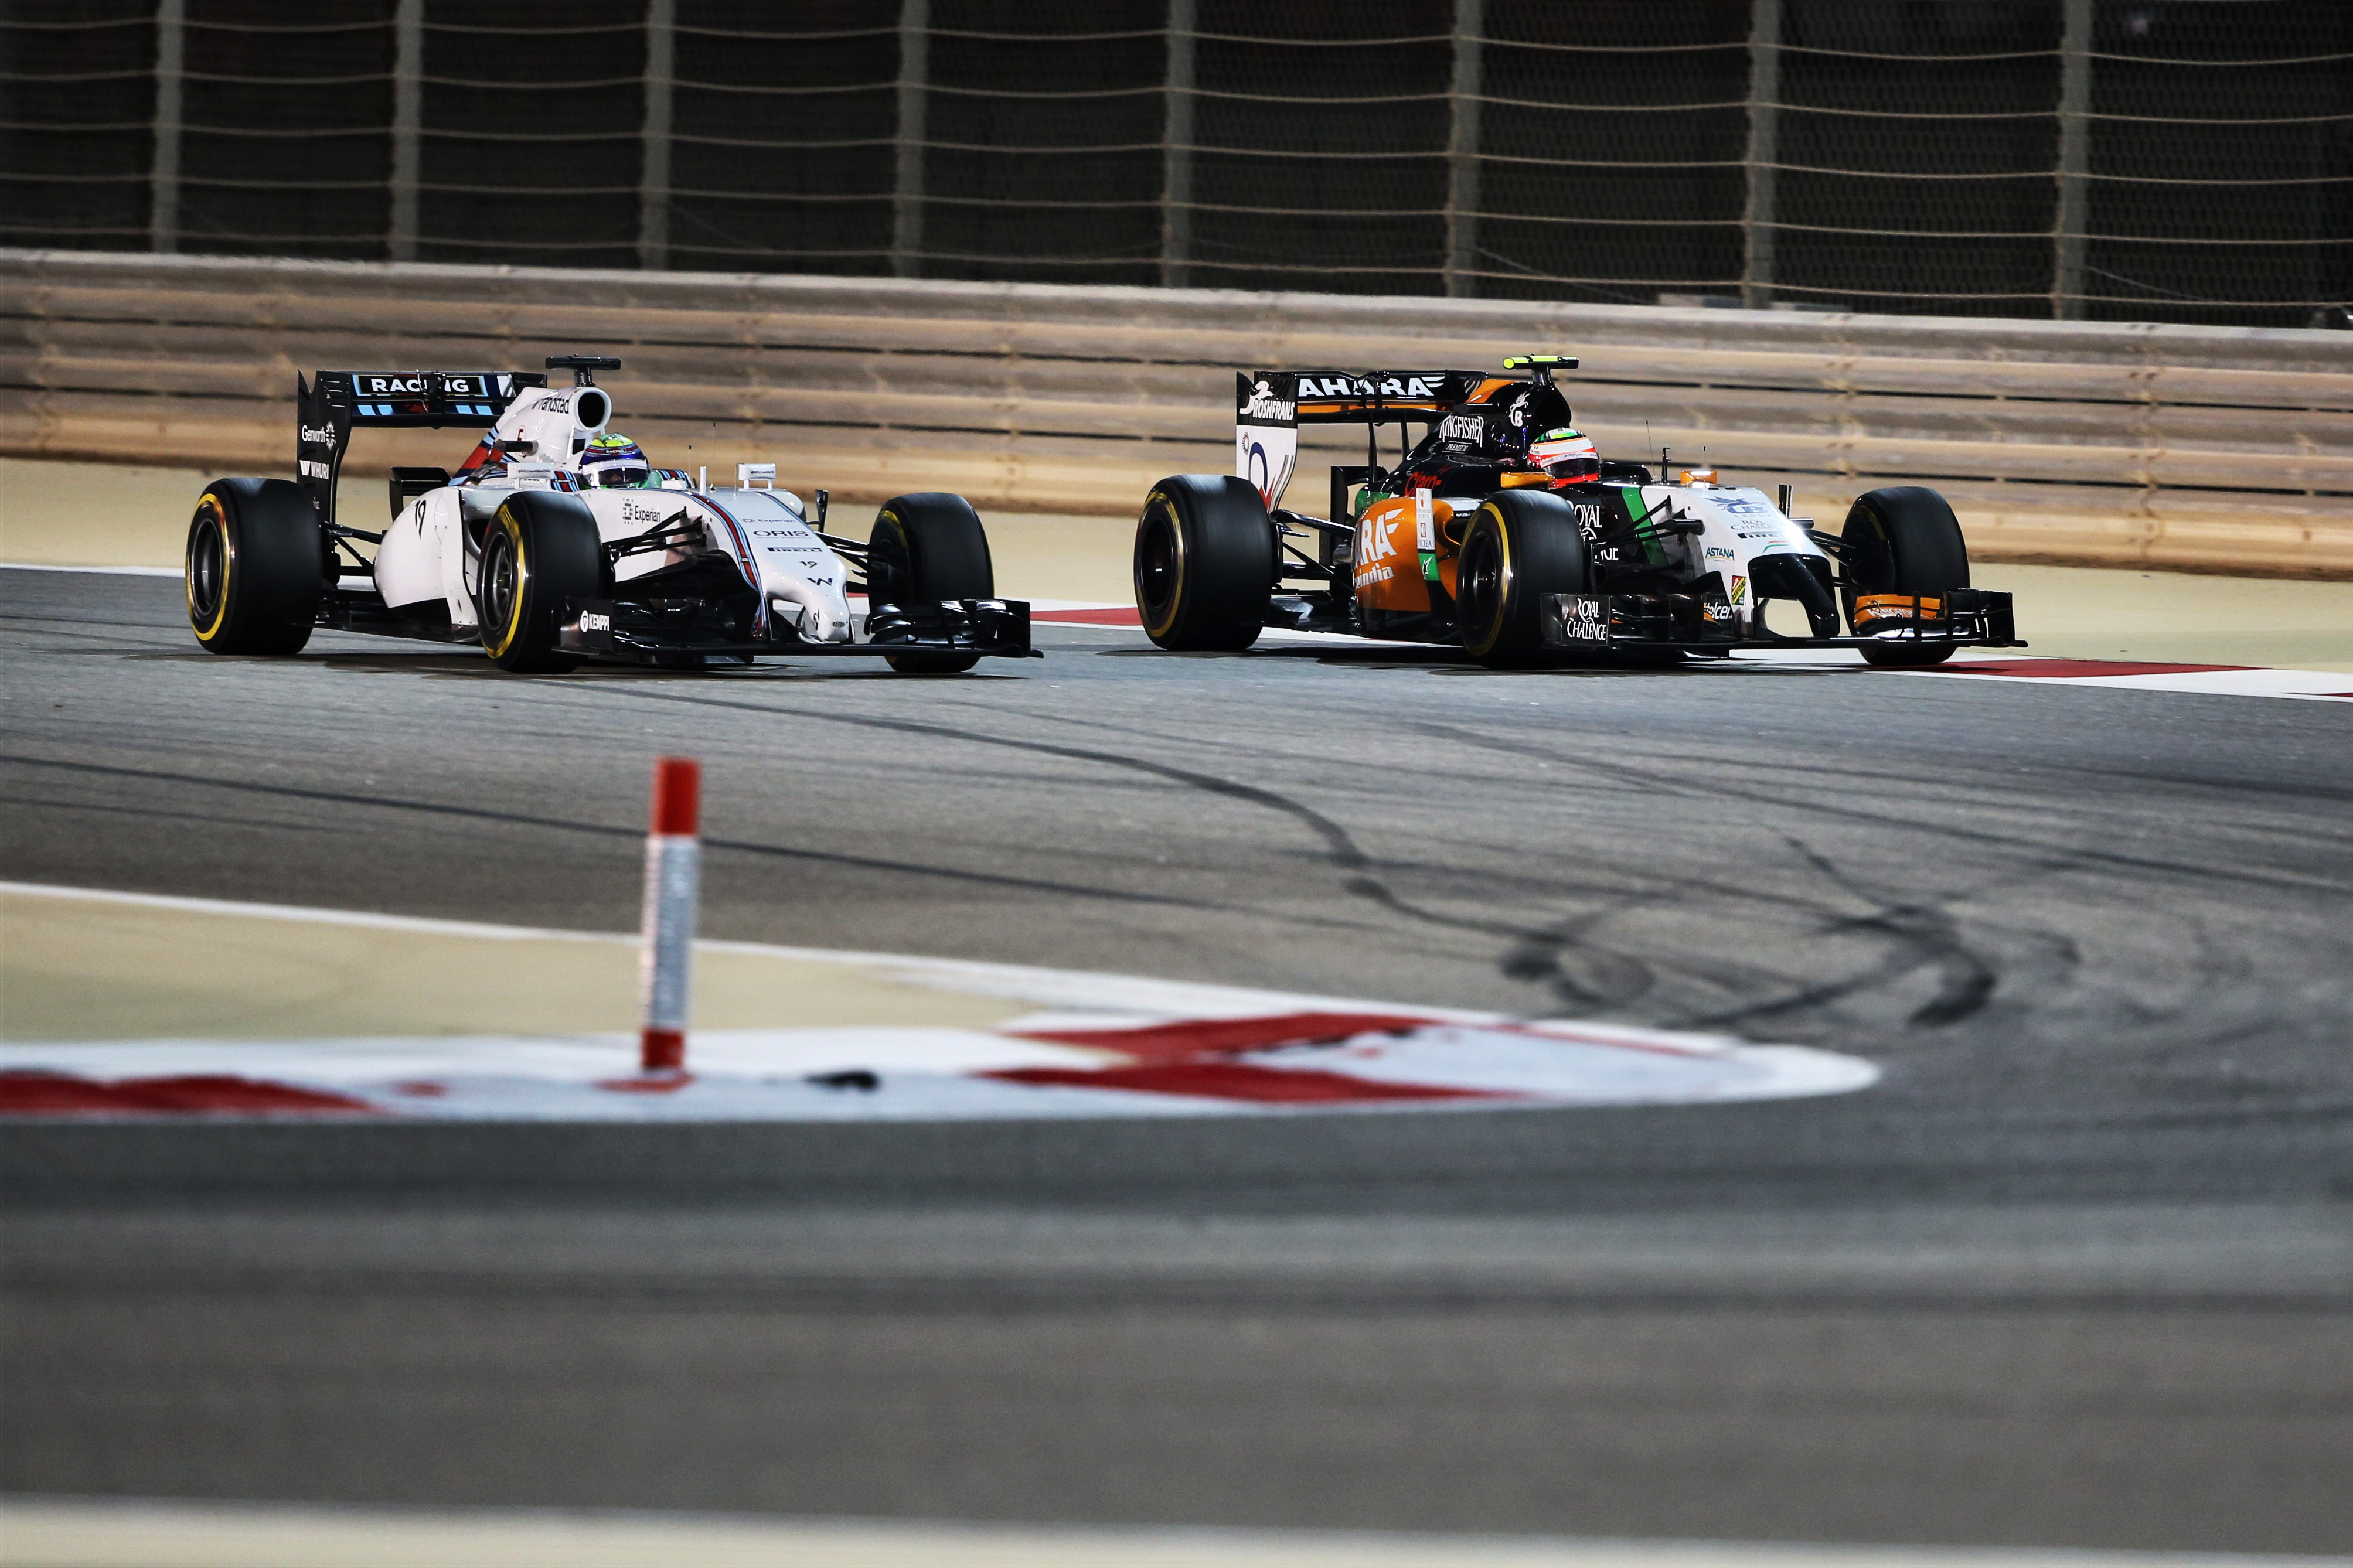 Williams en Force India vol goede moed naar Spa